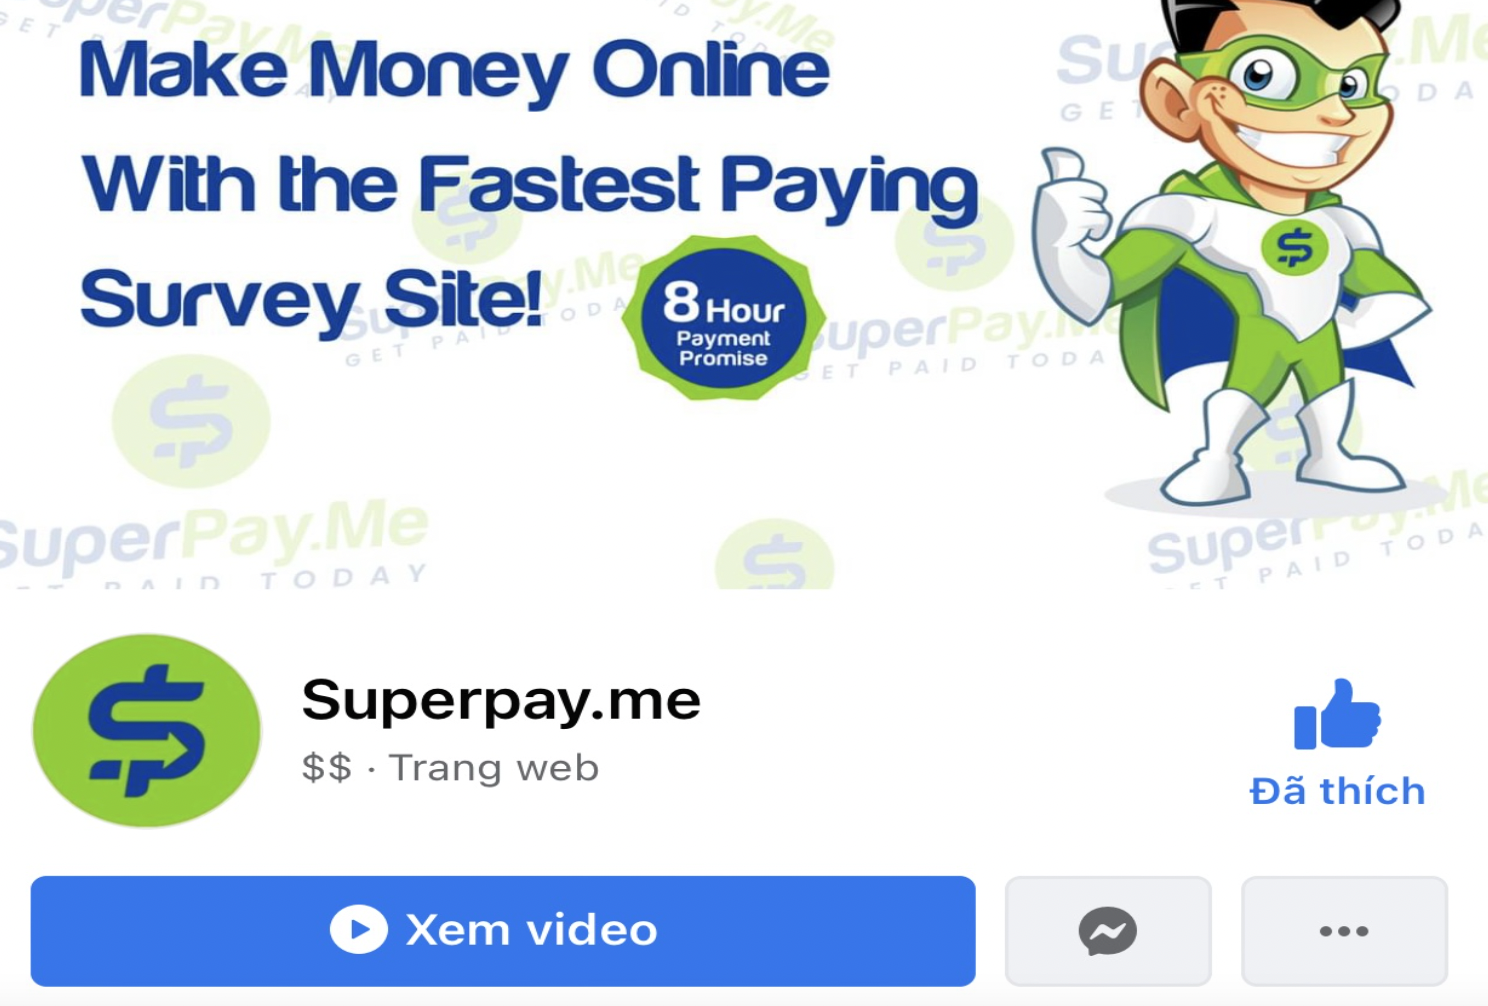 Trang Facebook chính của trang web Superpay.me